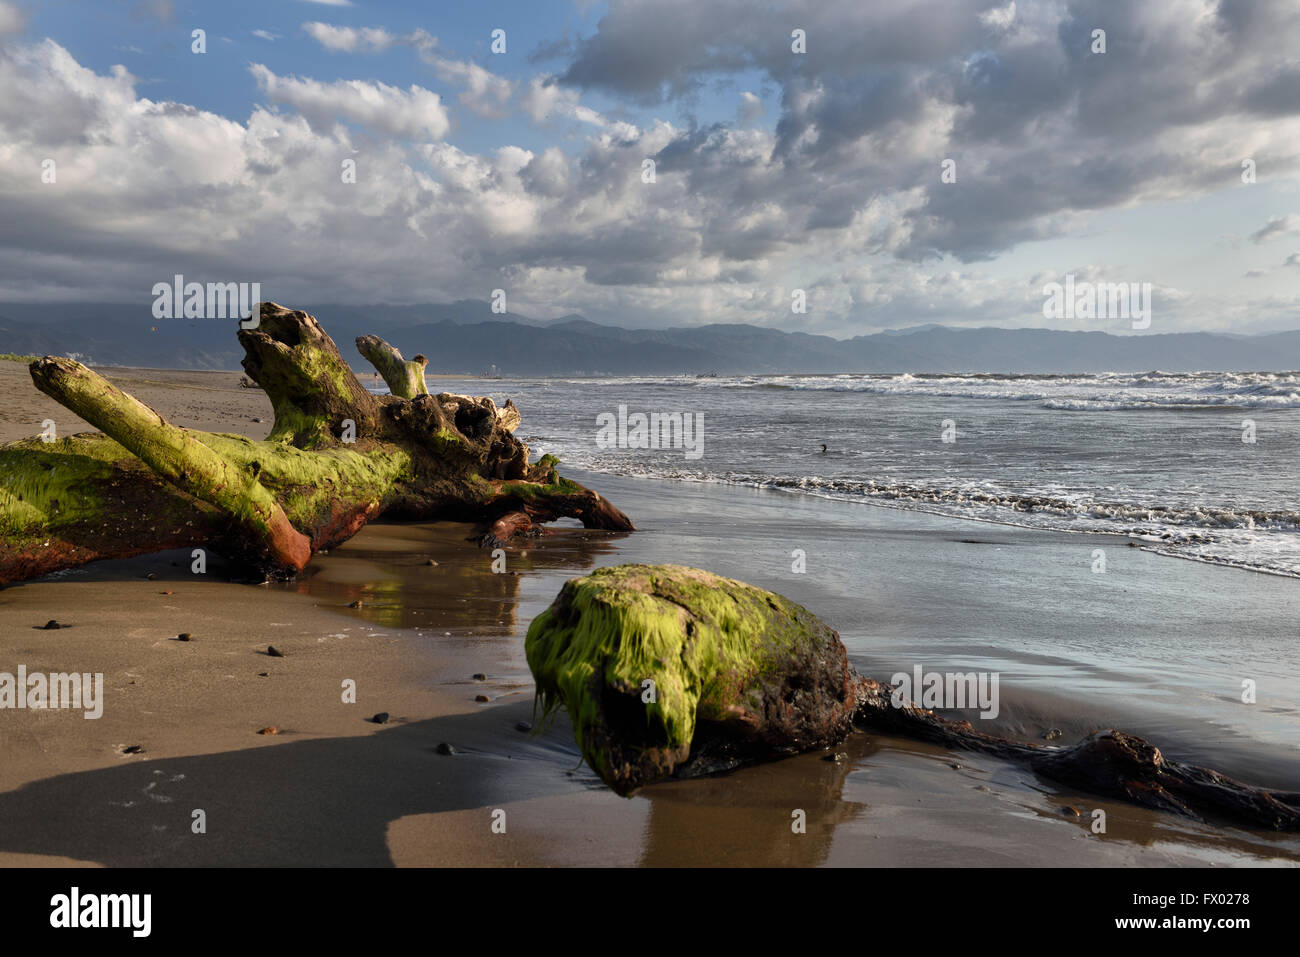 Tree driftwood covered in seaweed on beach of Nuevo Vallarta Mexico Stock Photo